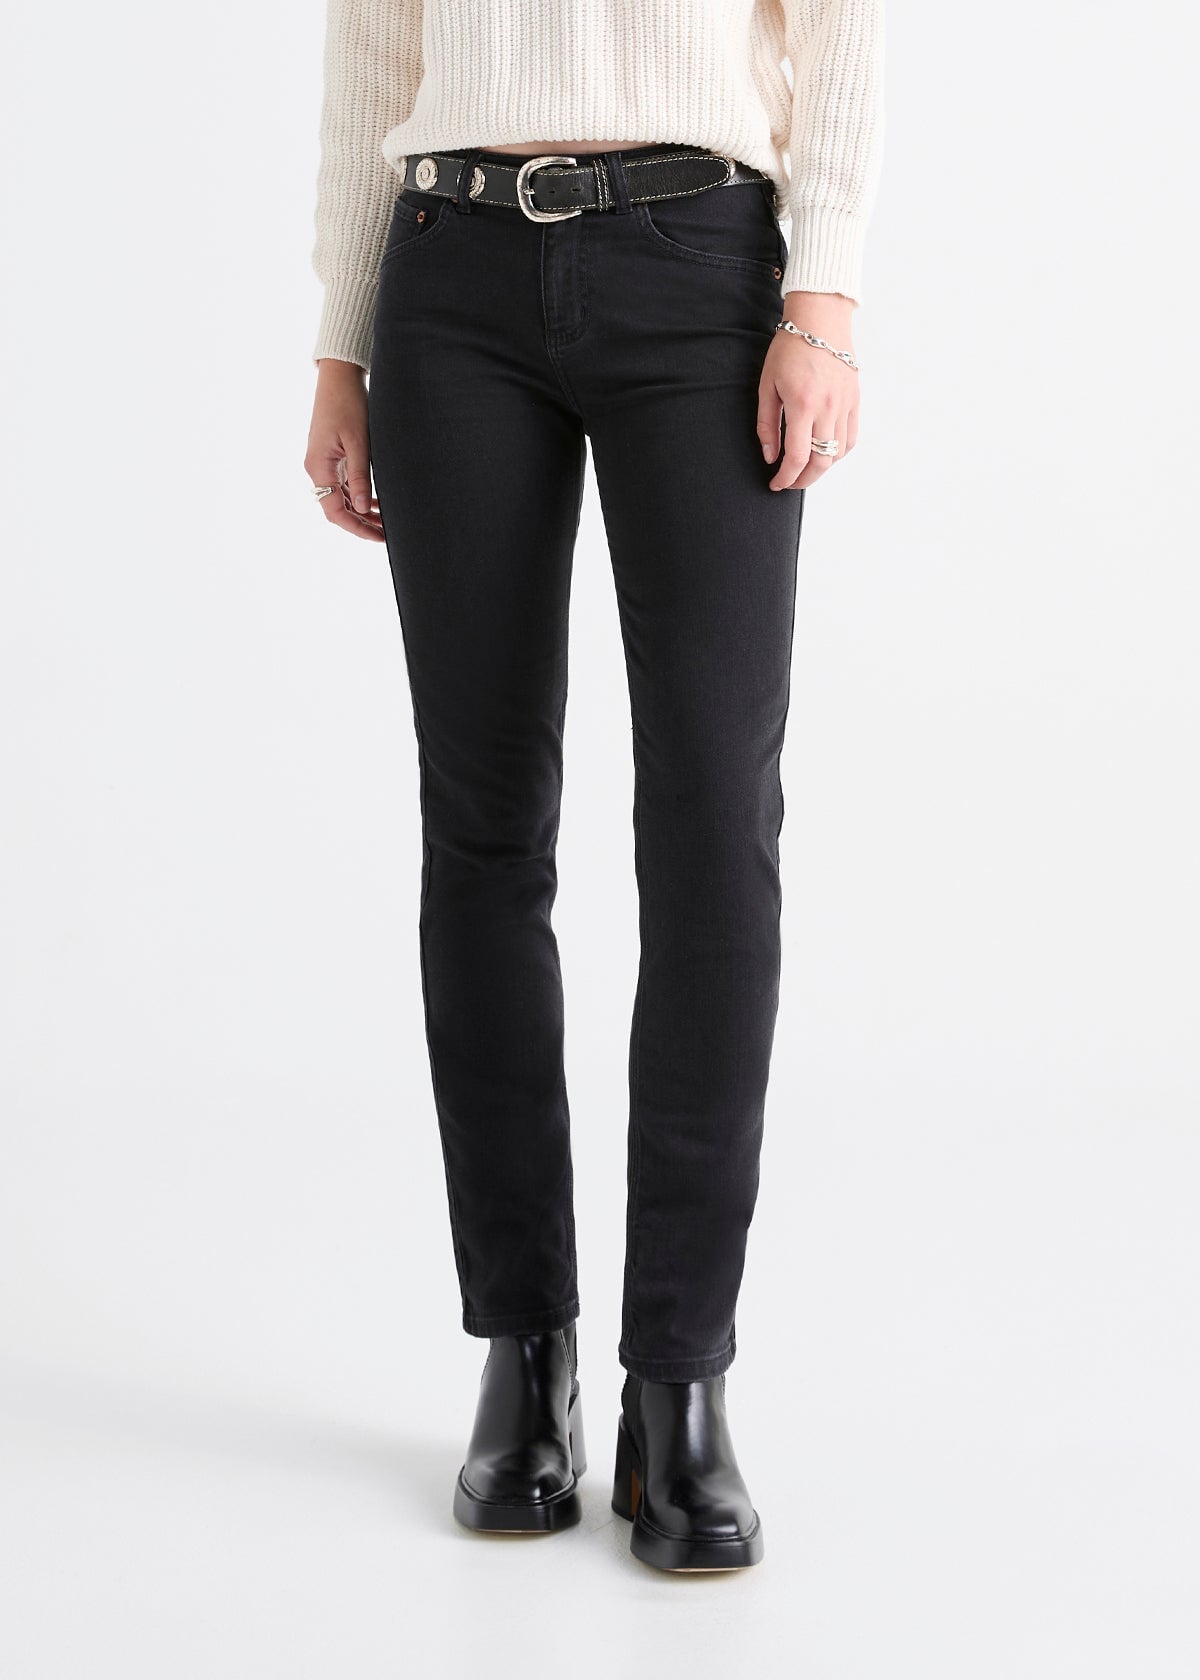 Slim Comfort Buff Fit Black Textured Jeans - Ruben